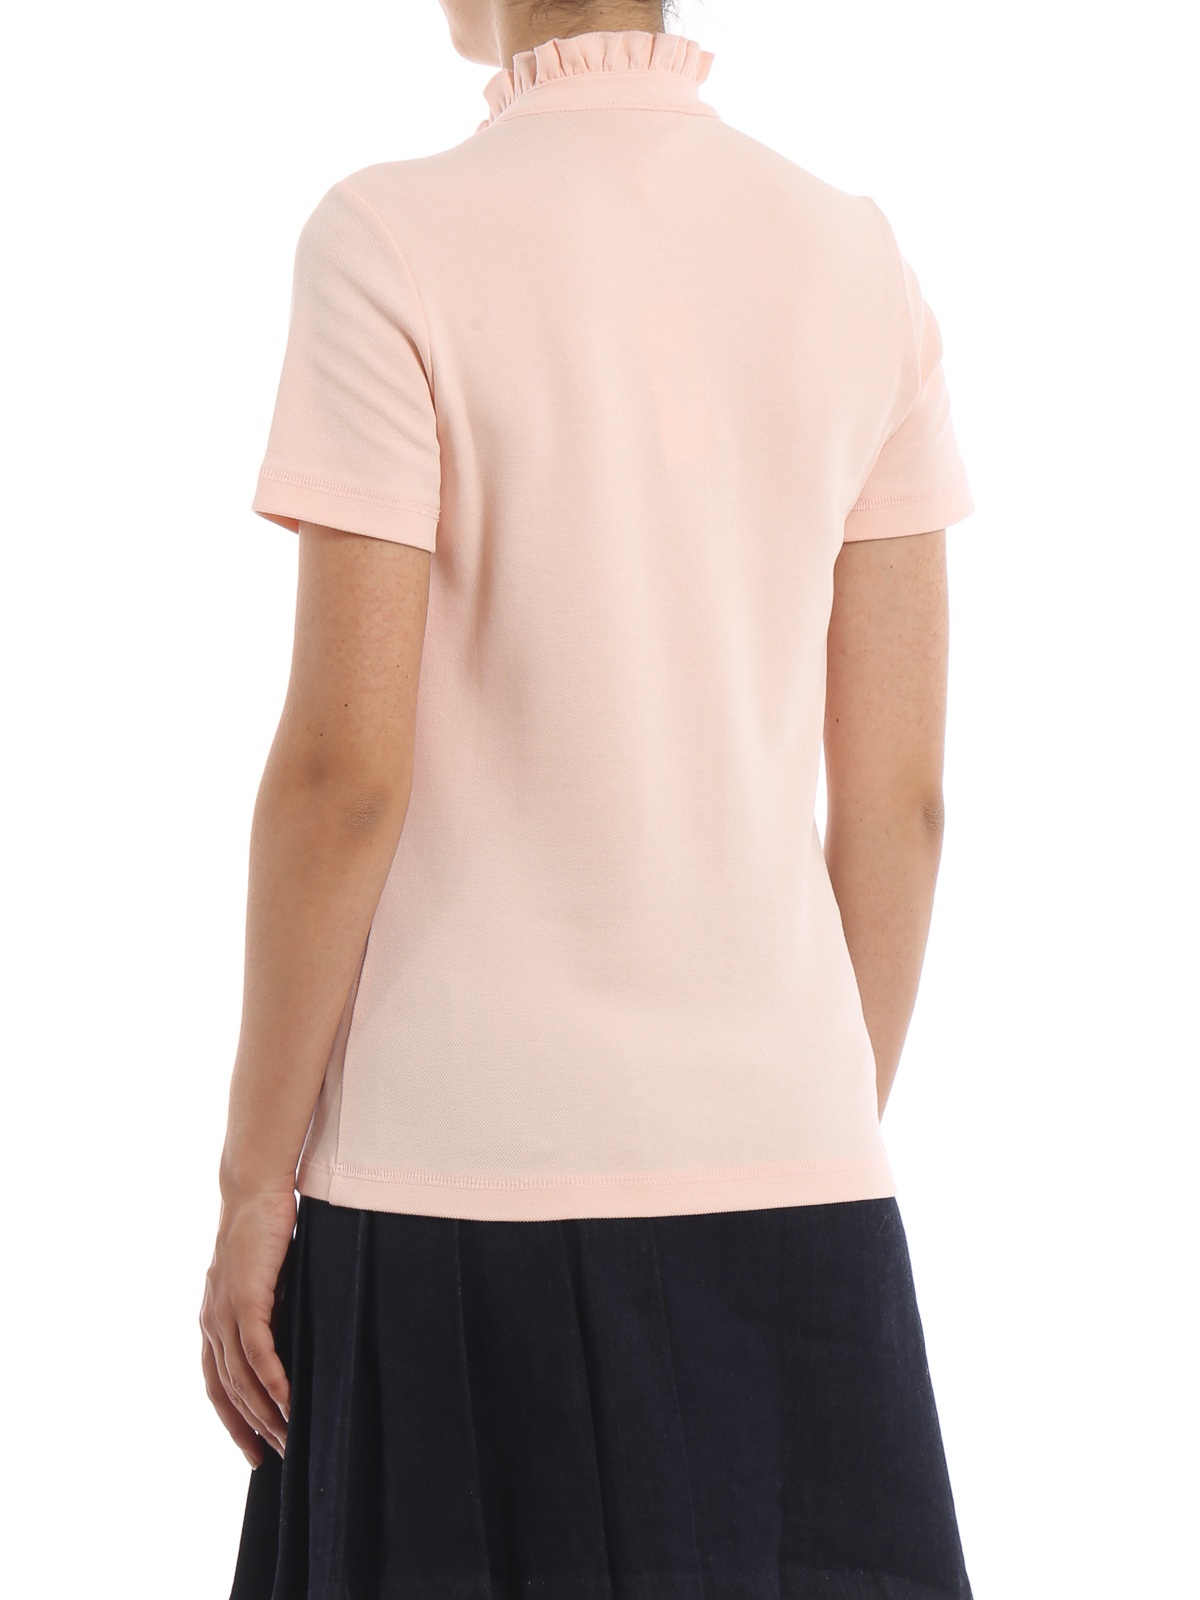 Polo shirts Tory Burch - Deneuve pale pink polo shirt - 48392654